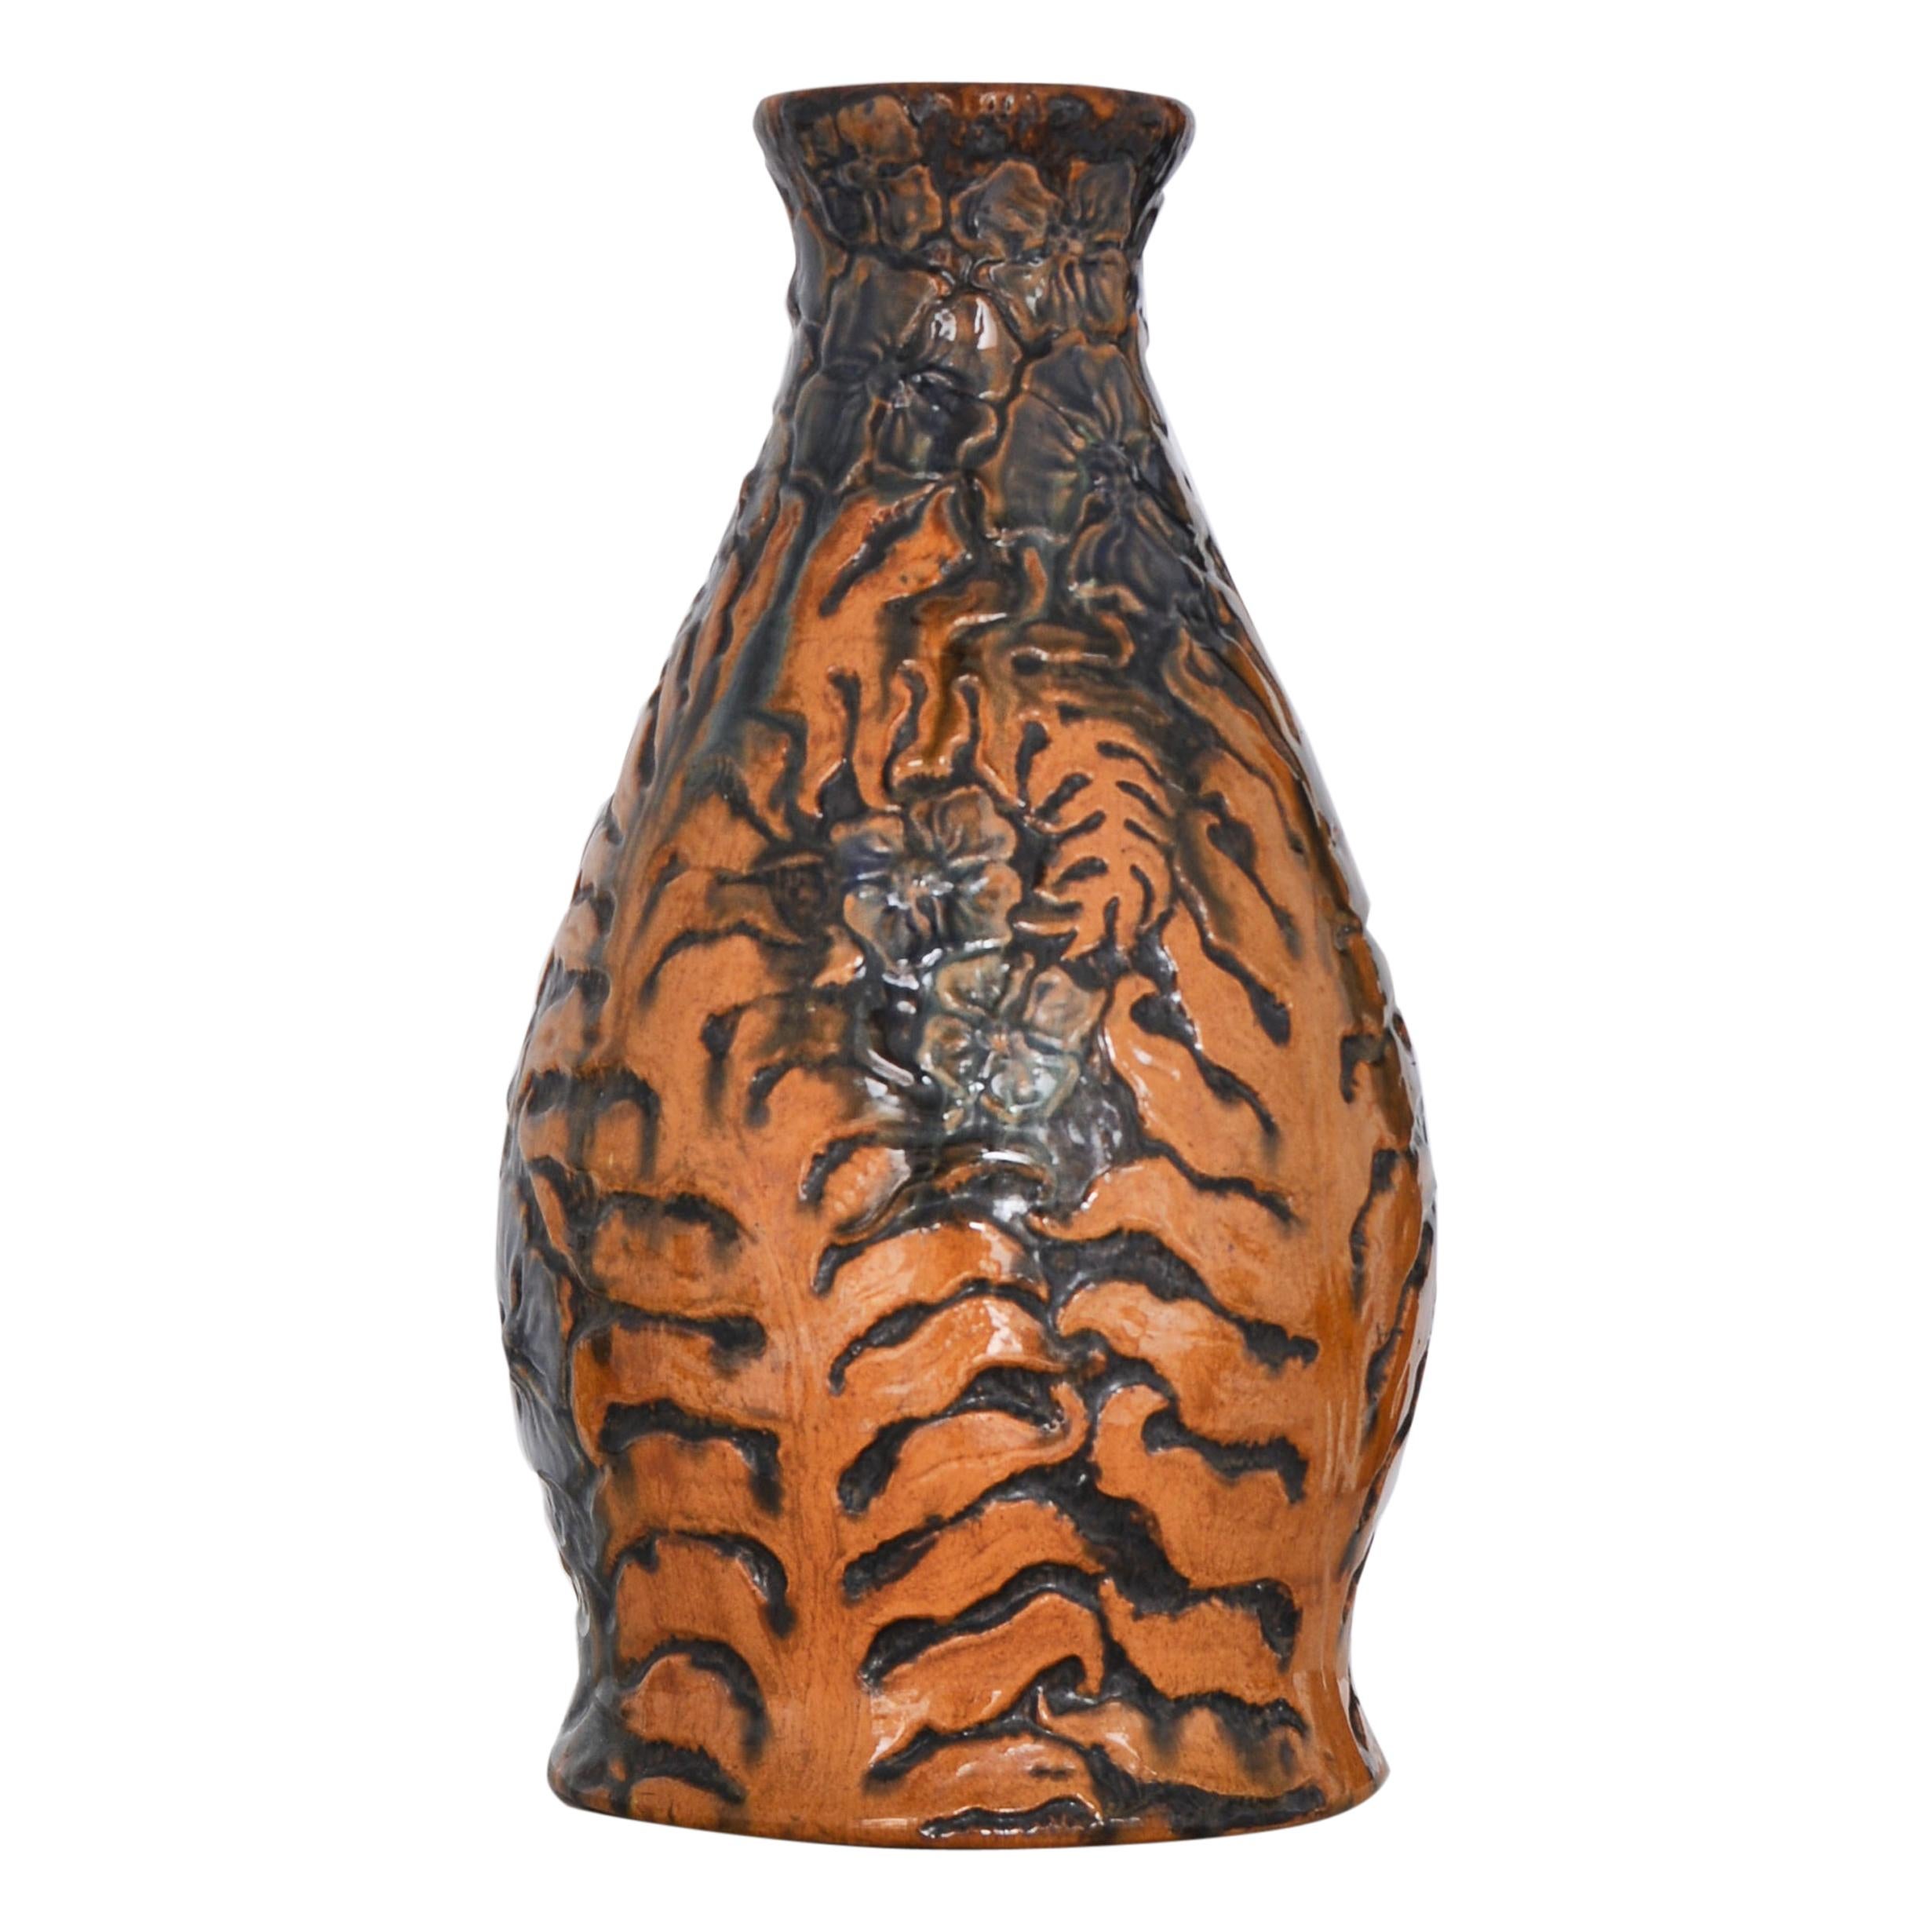 Large Art Nouveau / Jugend Style 1920s Ceramics Vase by MA & Sons, Denmark